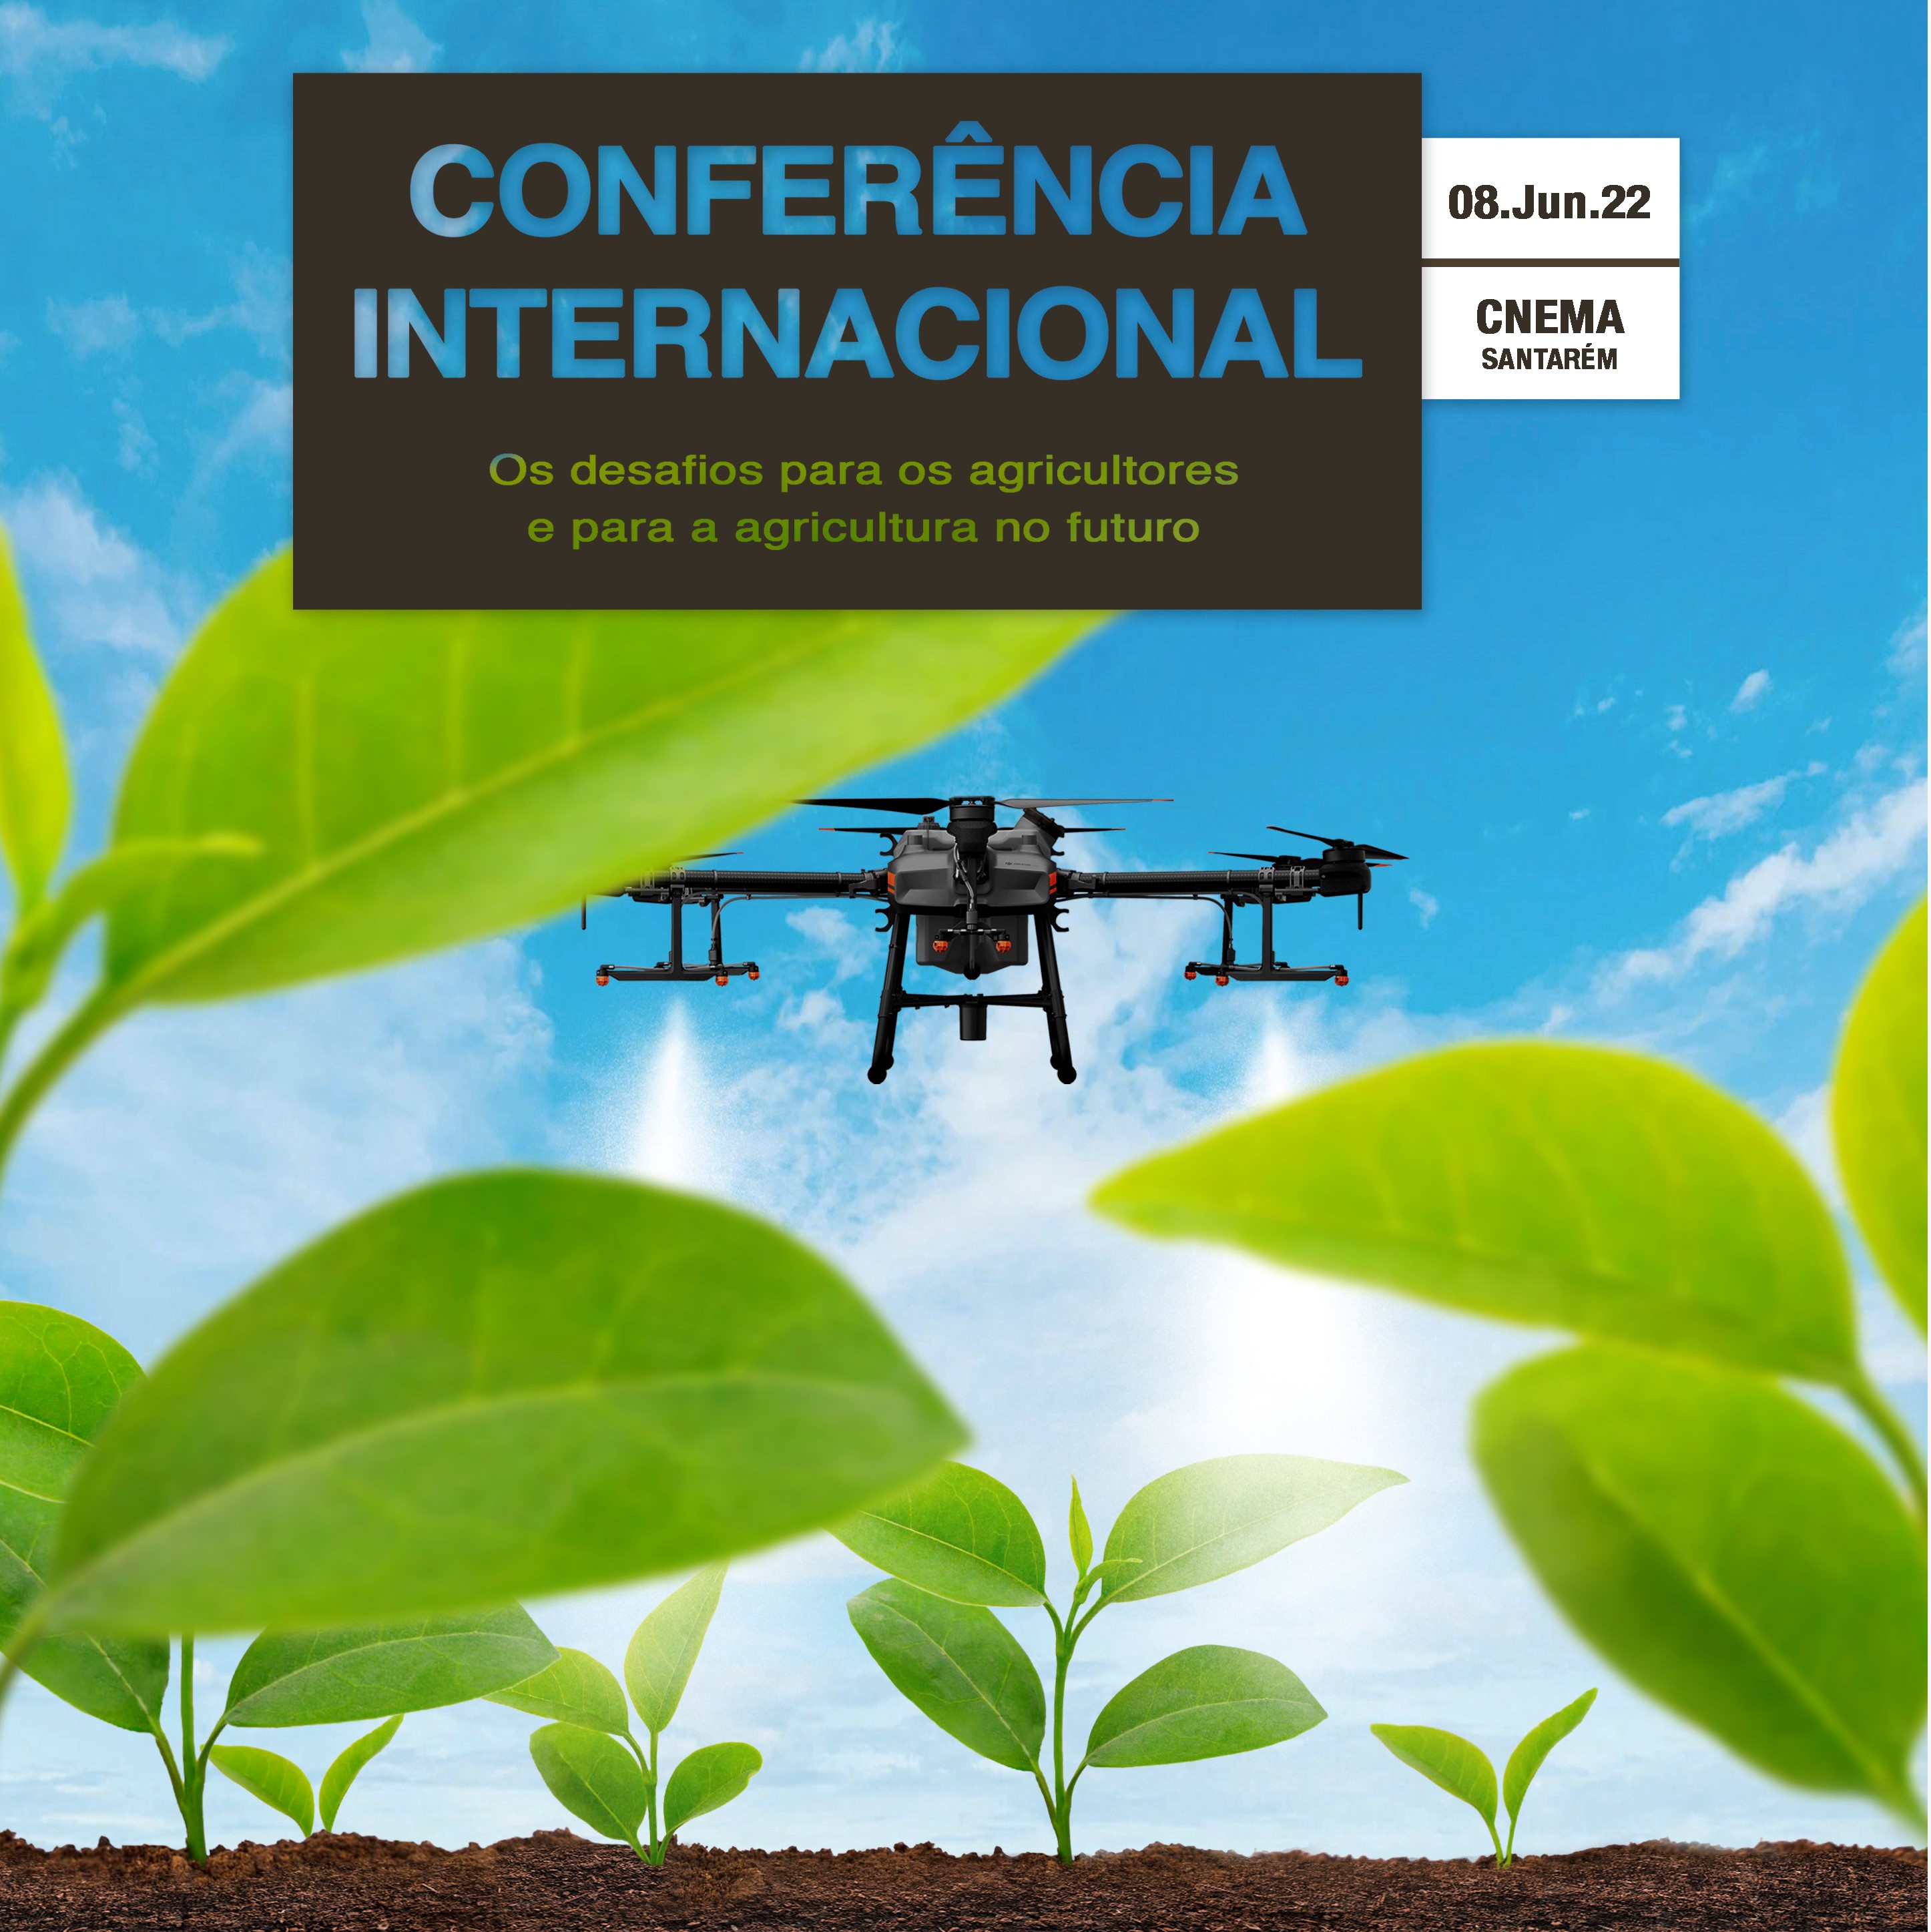 Conferência internacional: Os desafios para a agricultura